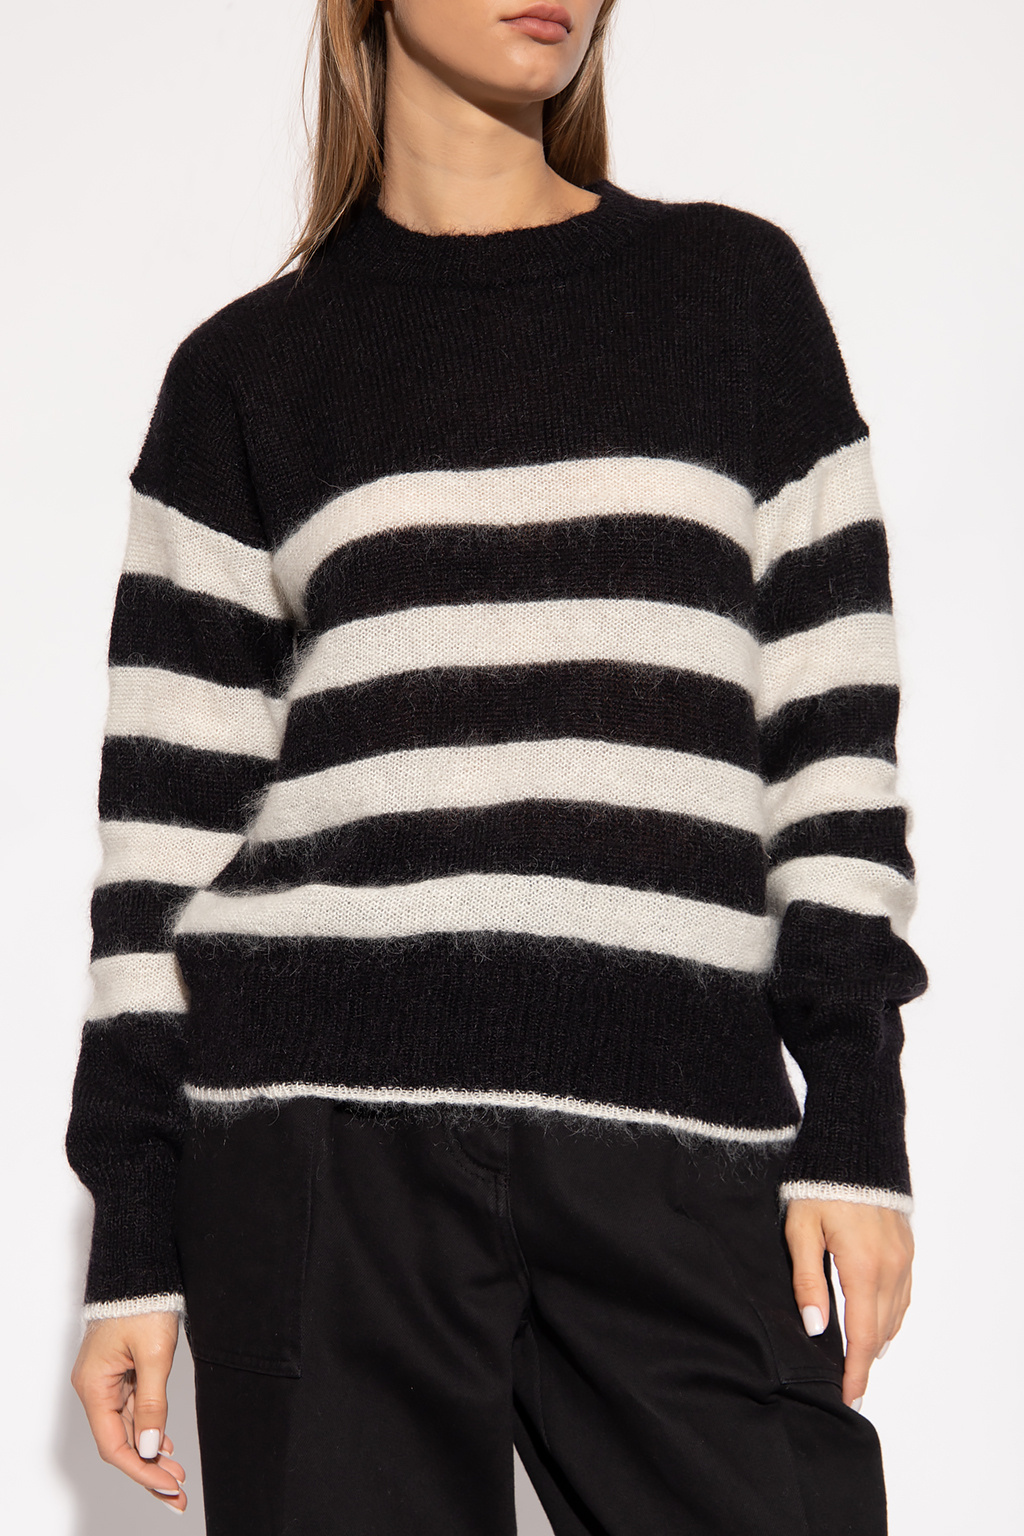 Philippe Model ‘Rosalie’ sweater